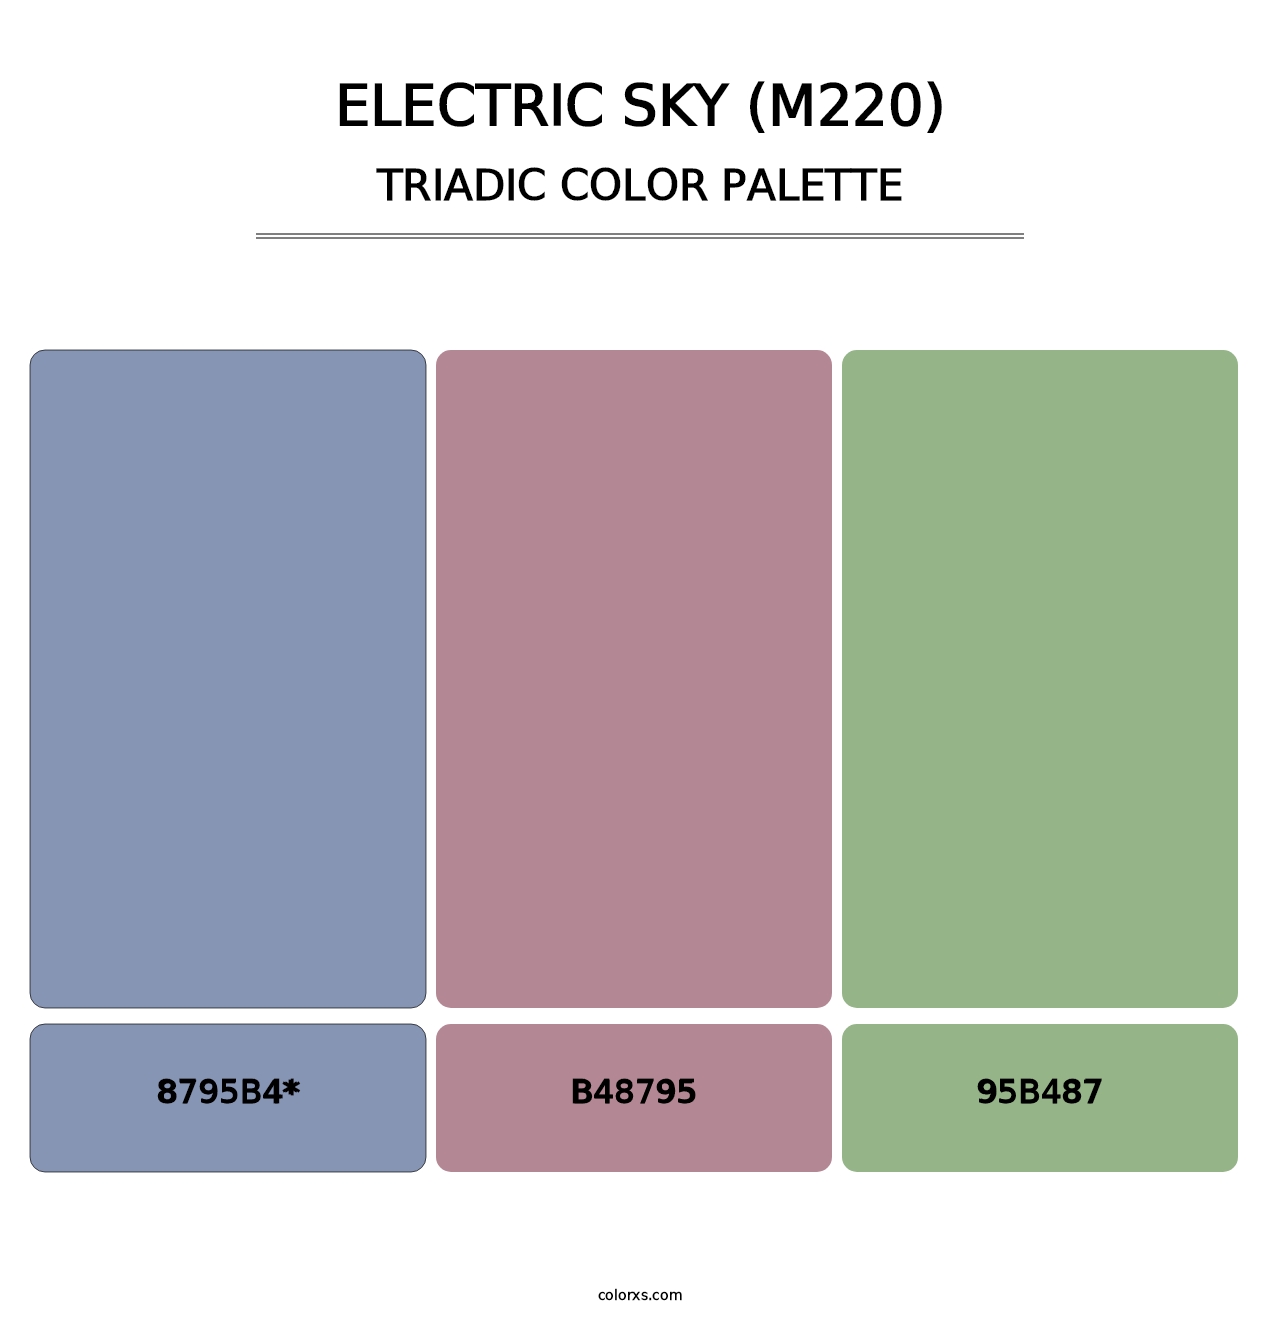 Electric Sky (M220) - Triadic Color Palette